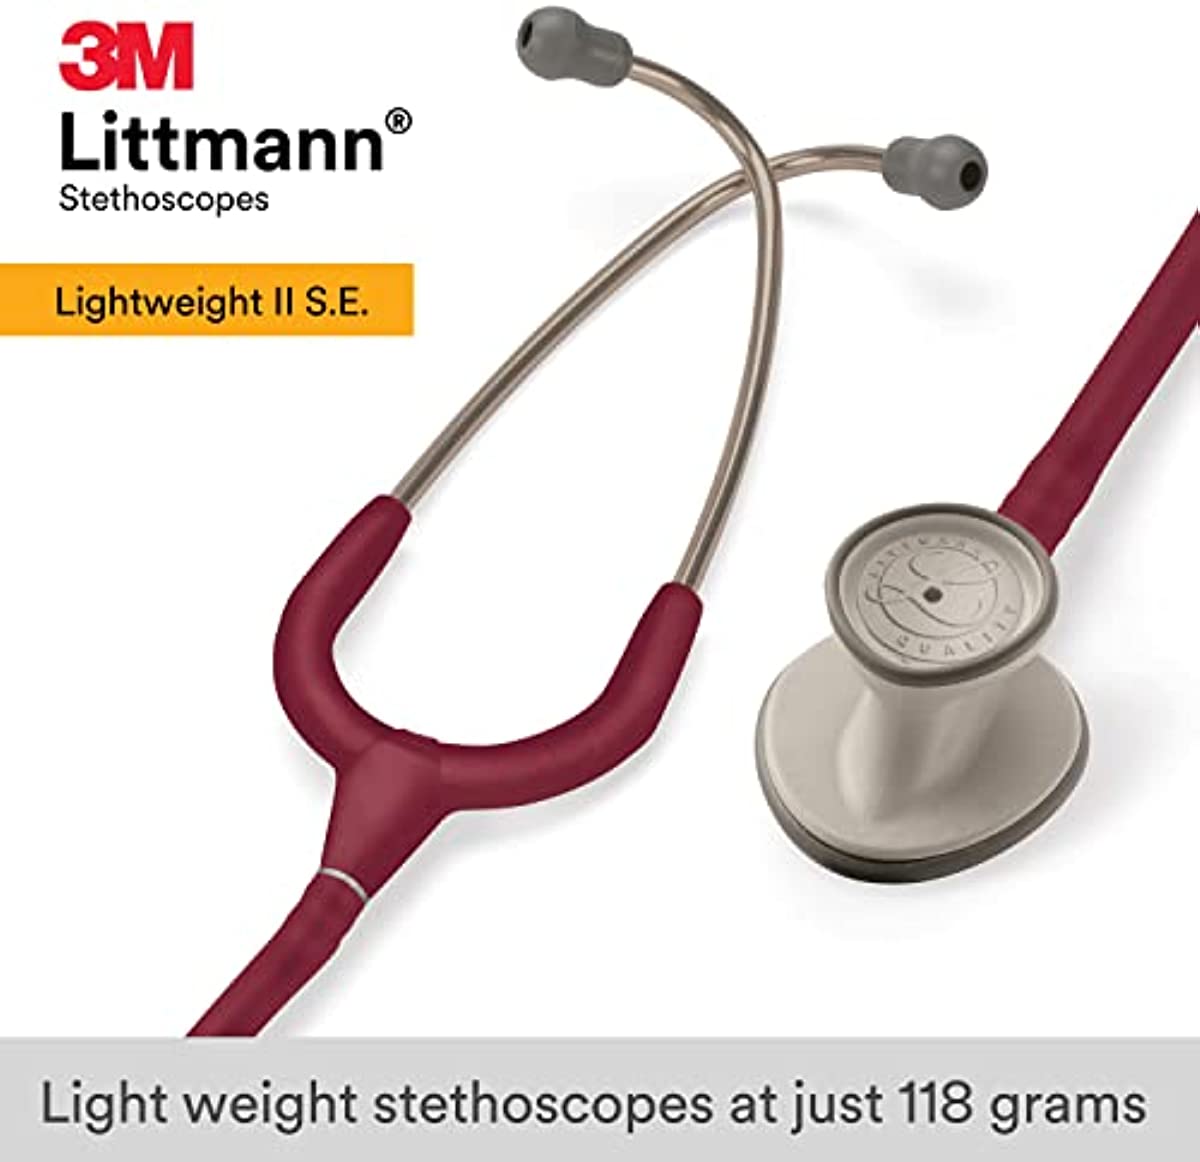 3M Littmann Lightweight II S.E. Stethoscope, Burgundy Tube, 28 inch, 2451